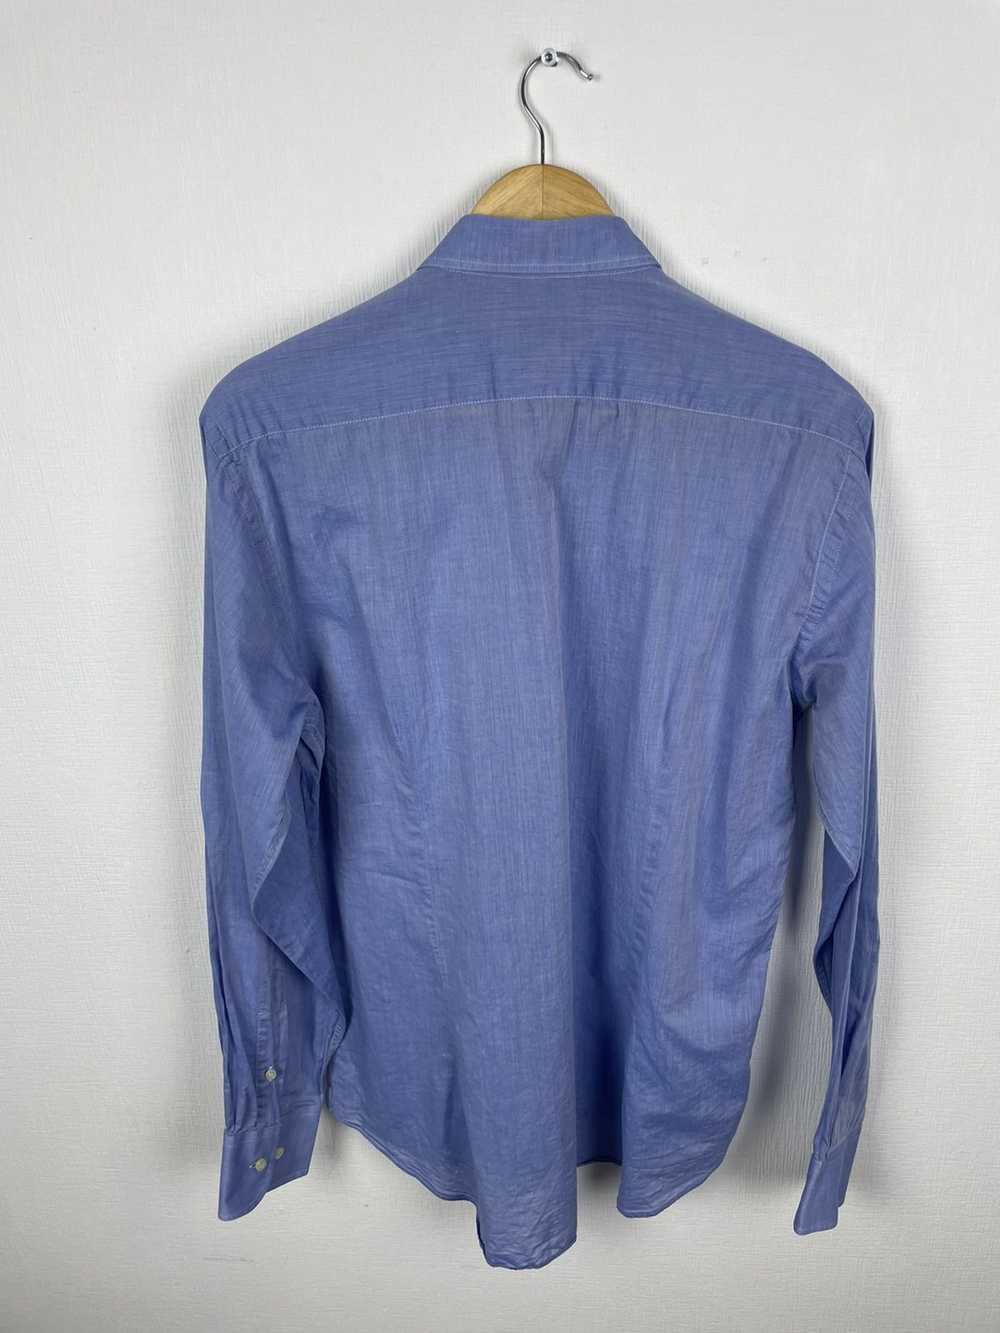 Etro Etro milano Men Shirt Button up size 41-L - image 8